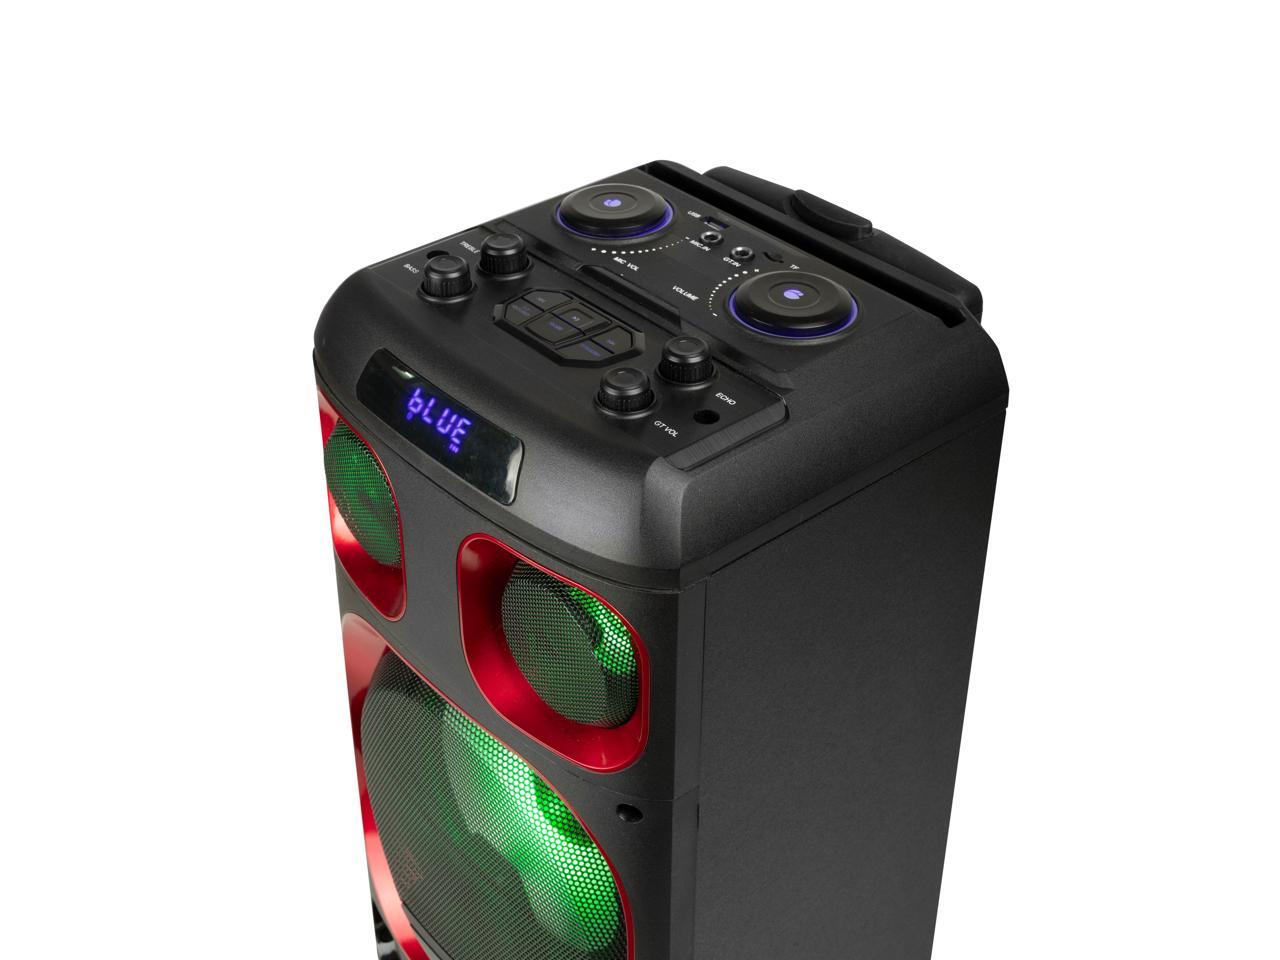 NGS 120W Portable Wireless BT Speaker with 8" Woofer, Microphone & RGB Lights - Wild Ska Zero